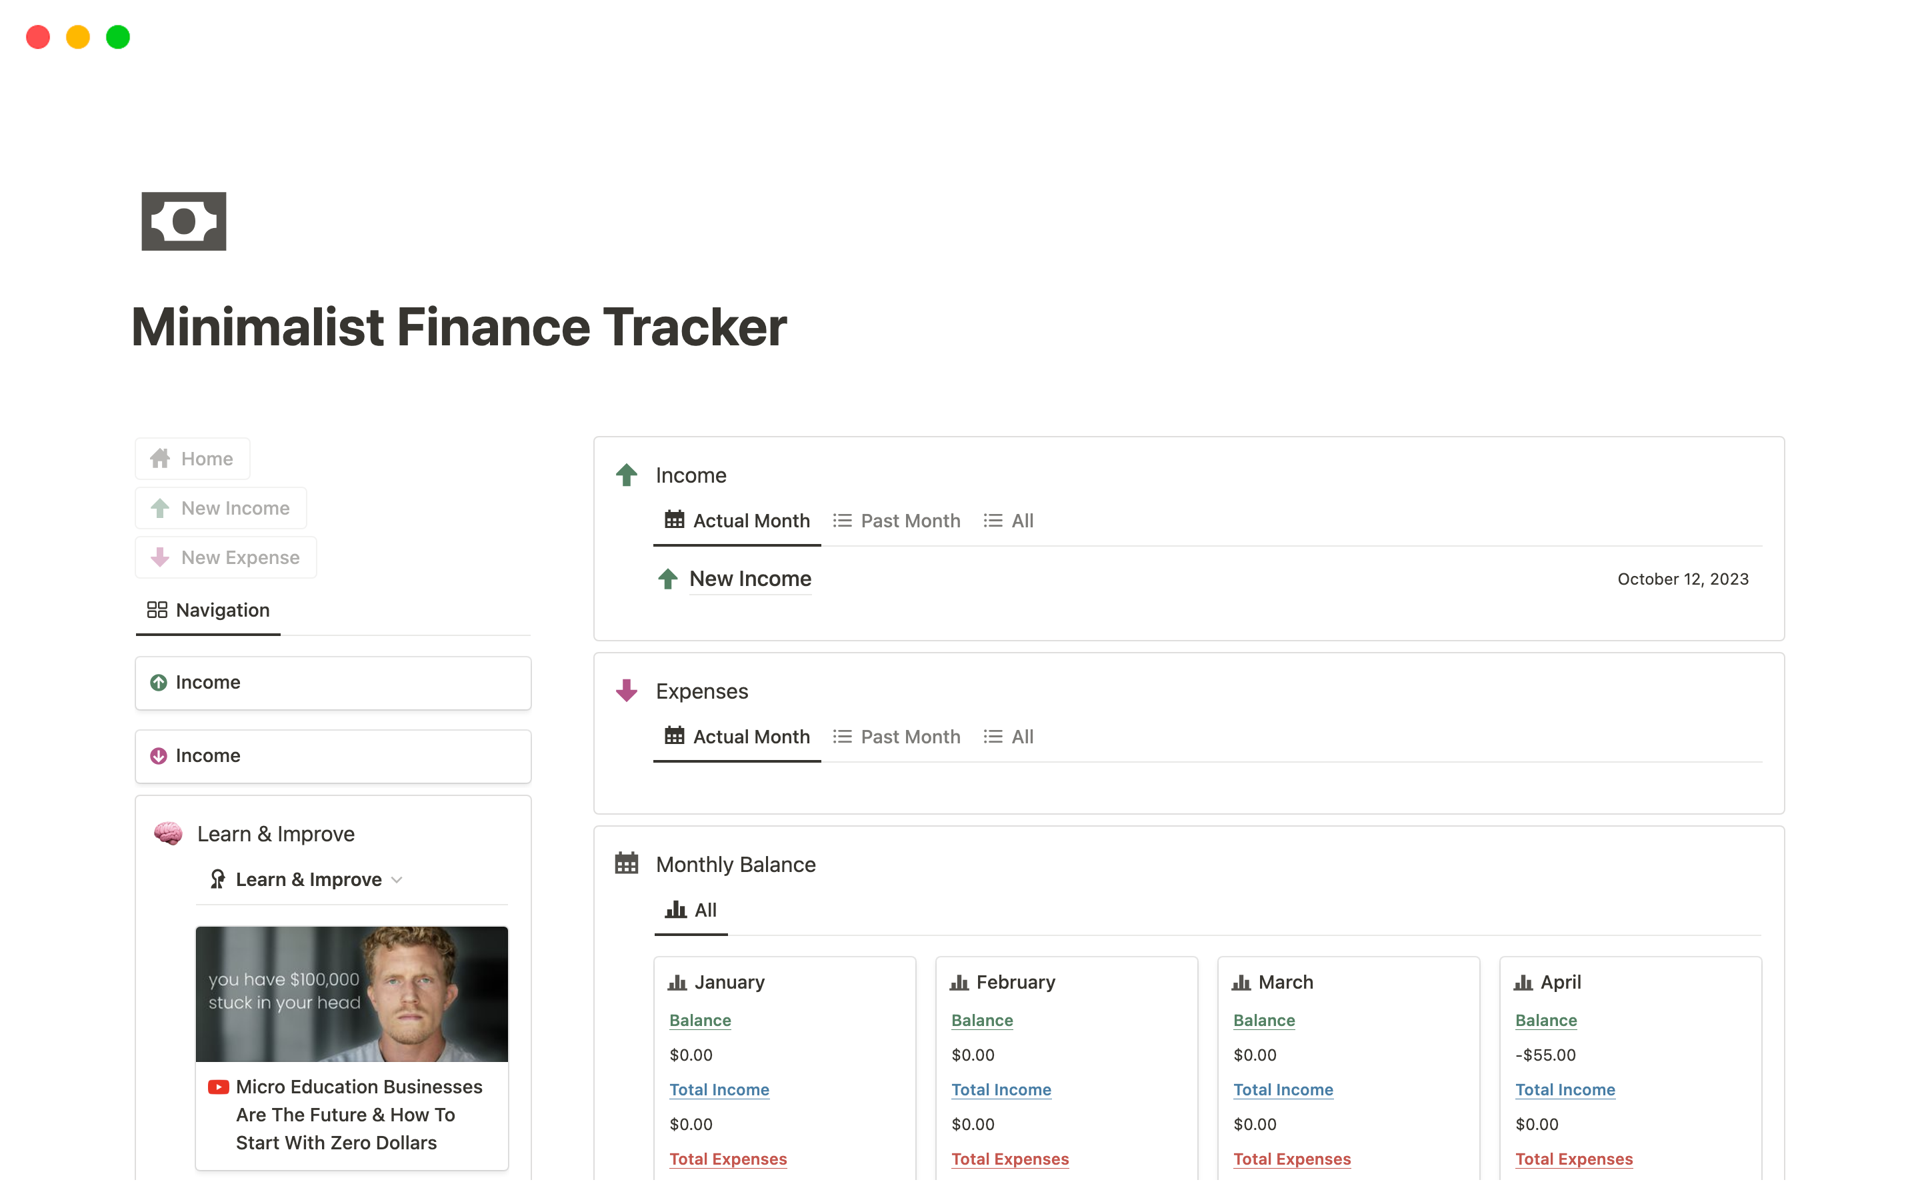 Vista previa de una plantilla para Minimalist Finance Tracker